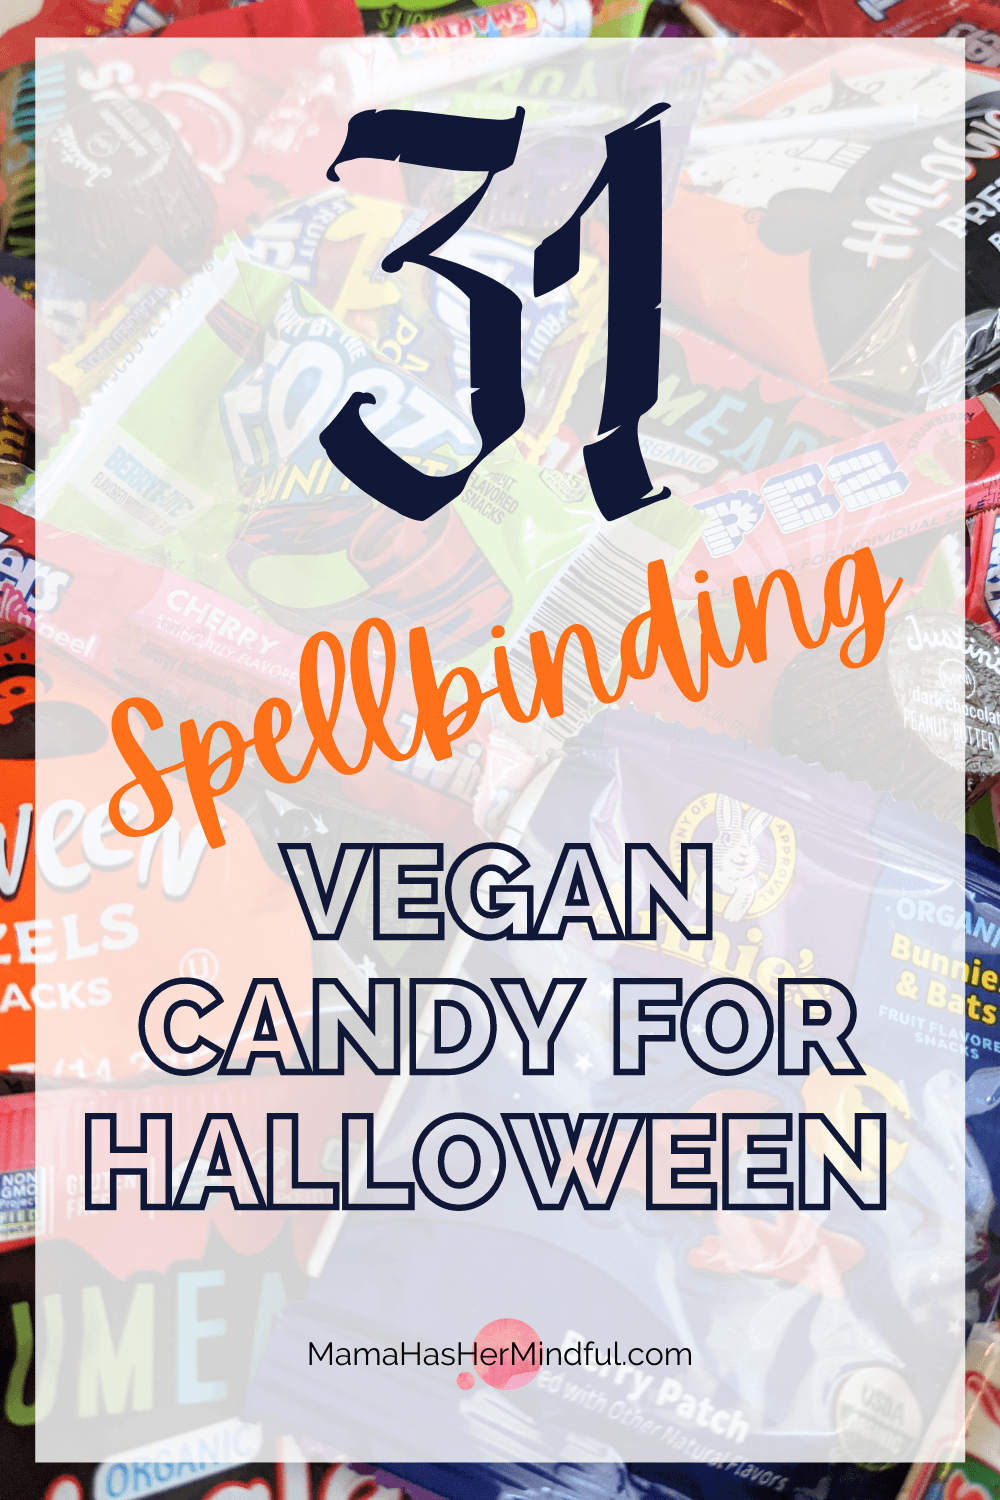 31 Spookily Scrumptious Vegan Halloween Candies and Treats